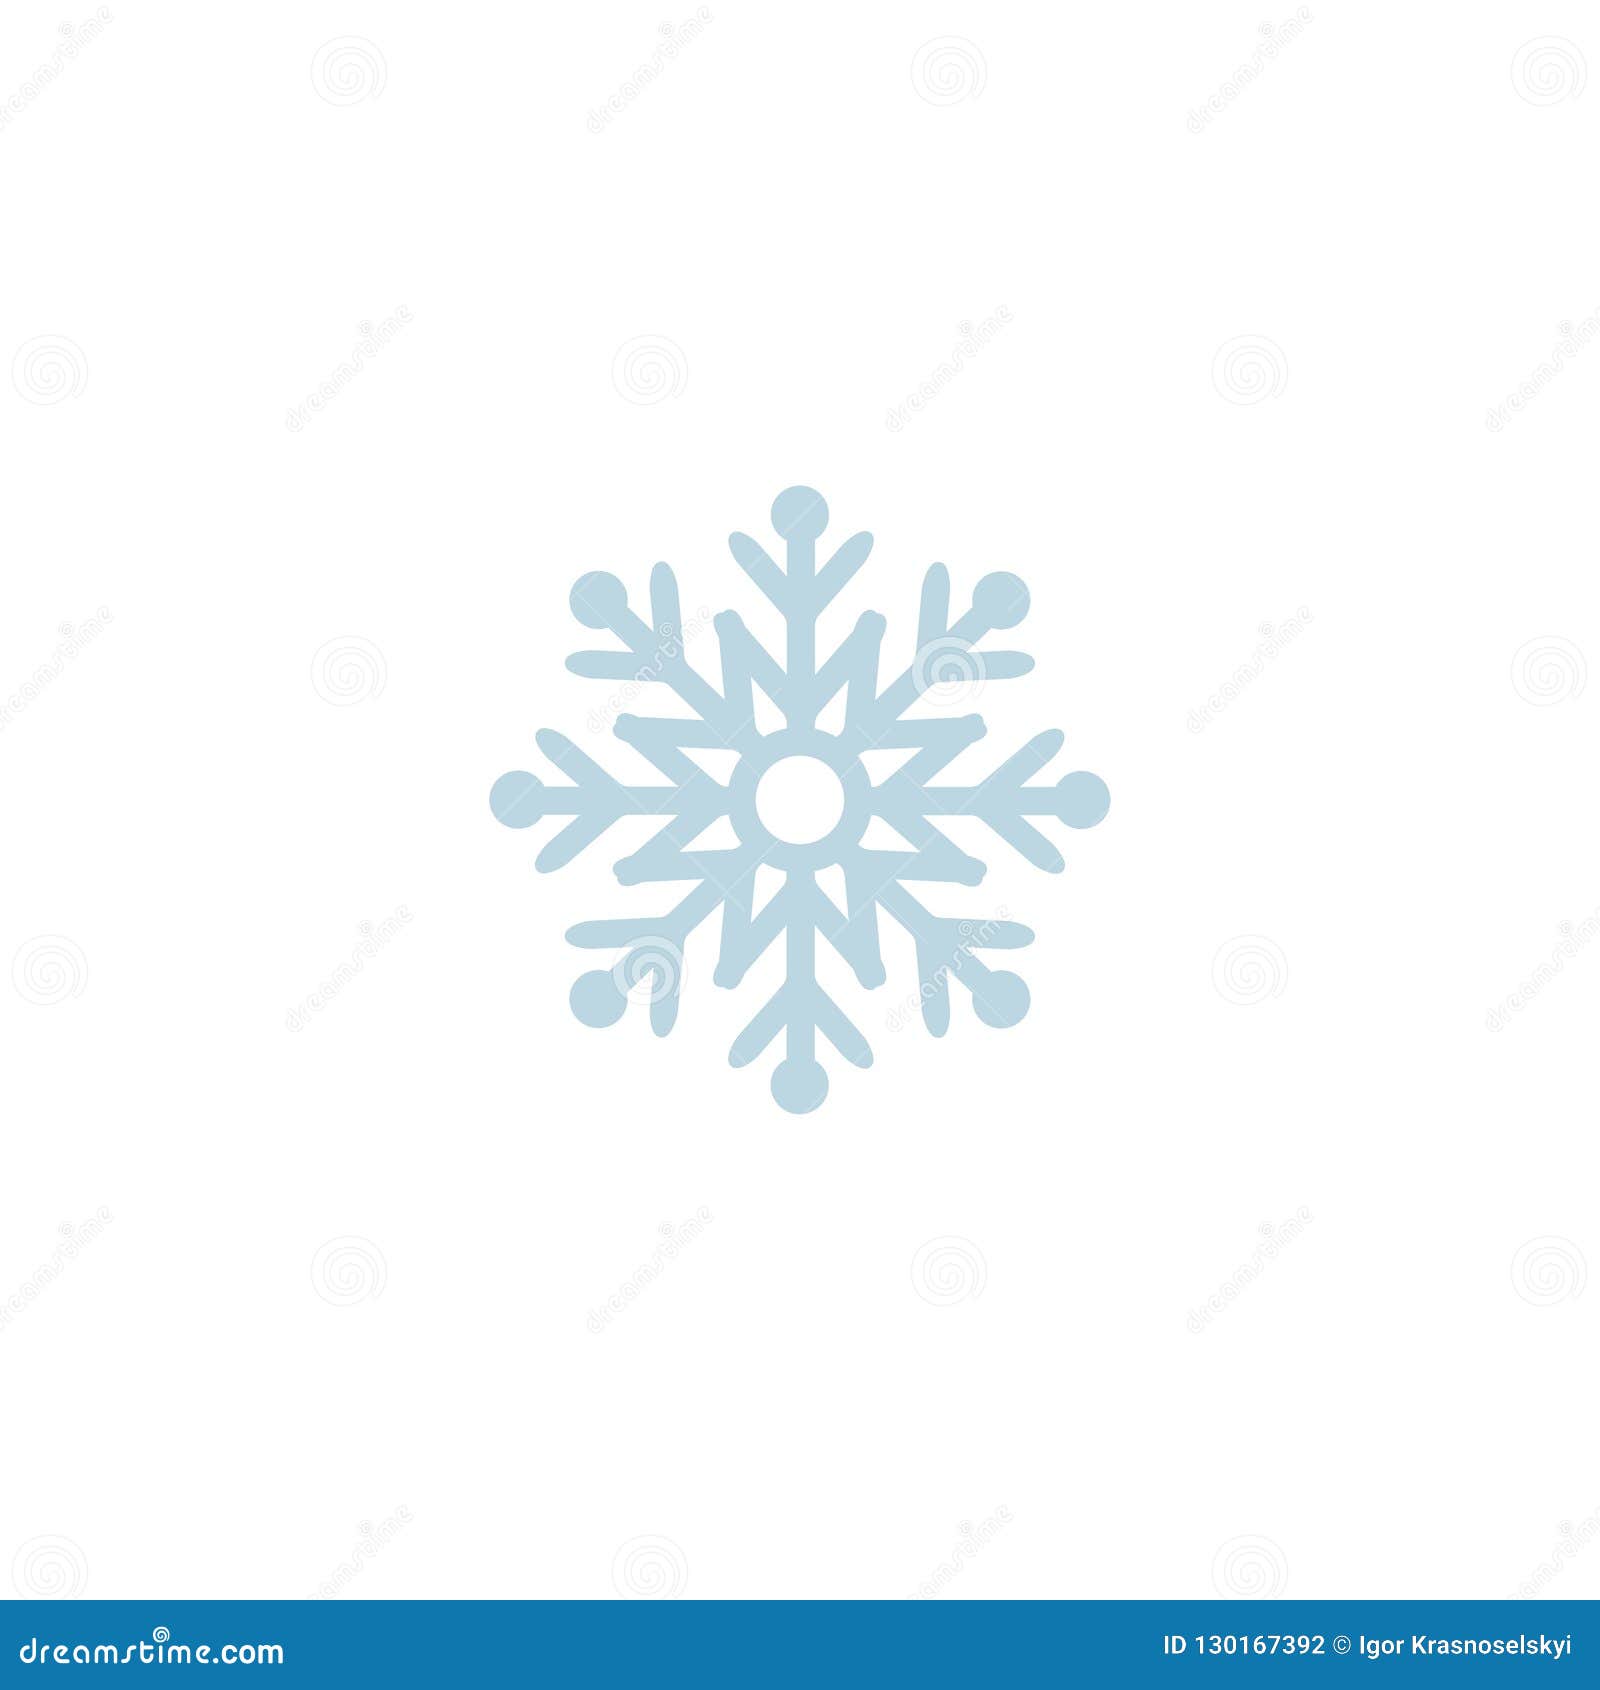 Snowflake Icon. Template Christmas Snowflake on Blank Background In Blank Snowflake Template